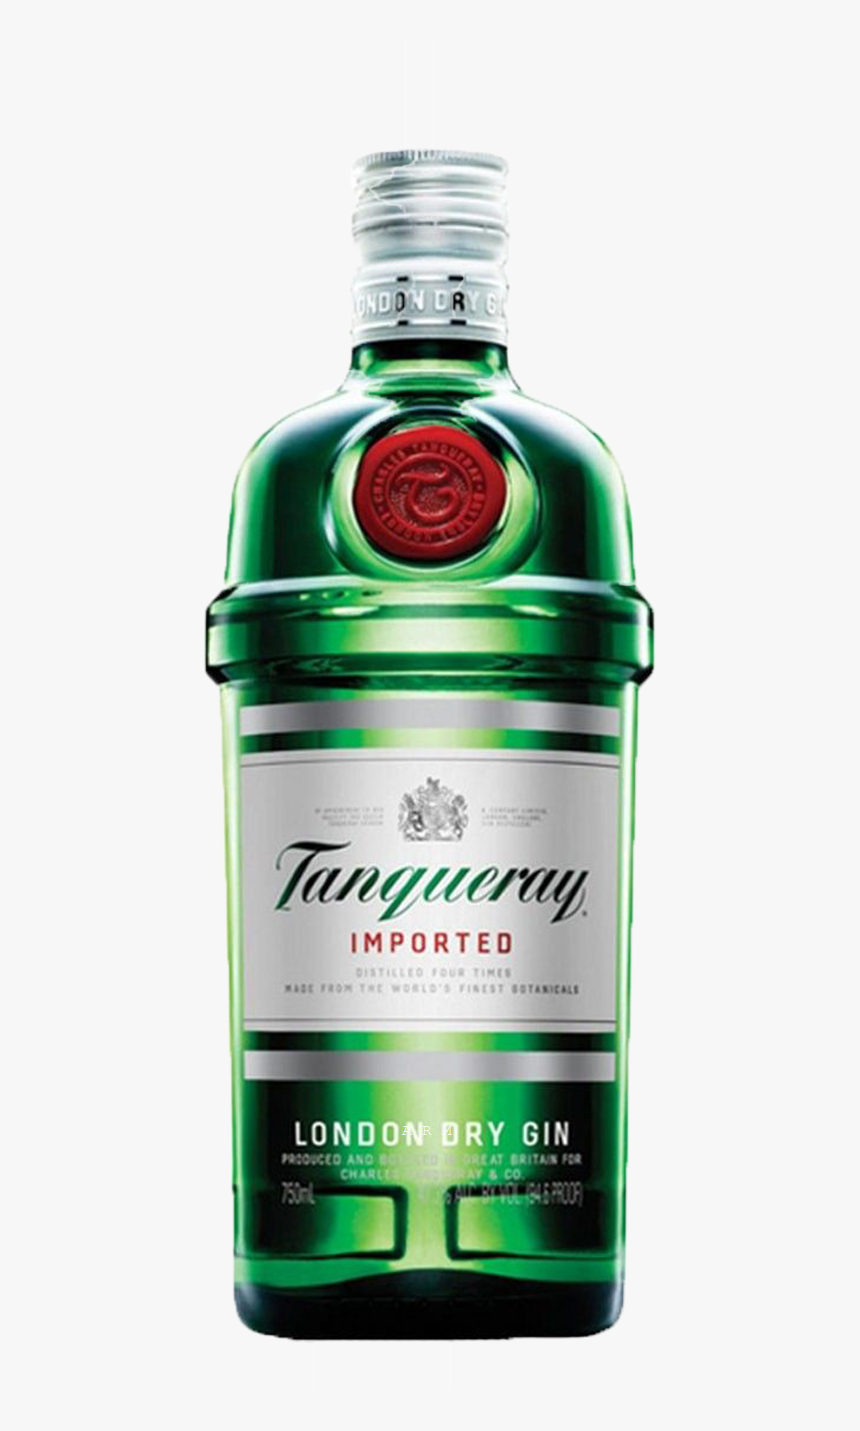 Tanqueray London Dry Gin. Джин Tanqueray ТЭН. Джин London Dry Gin.